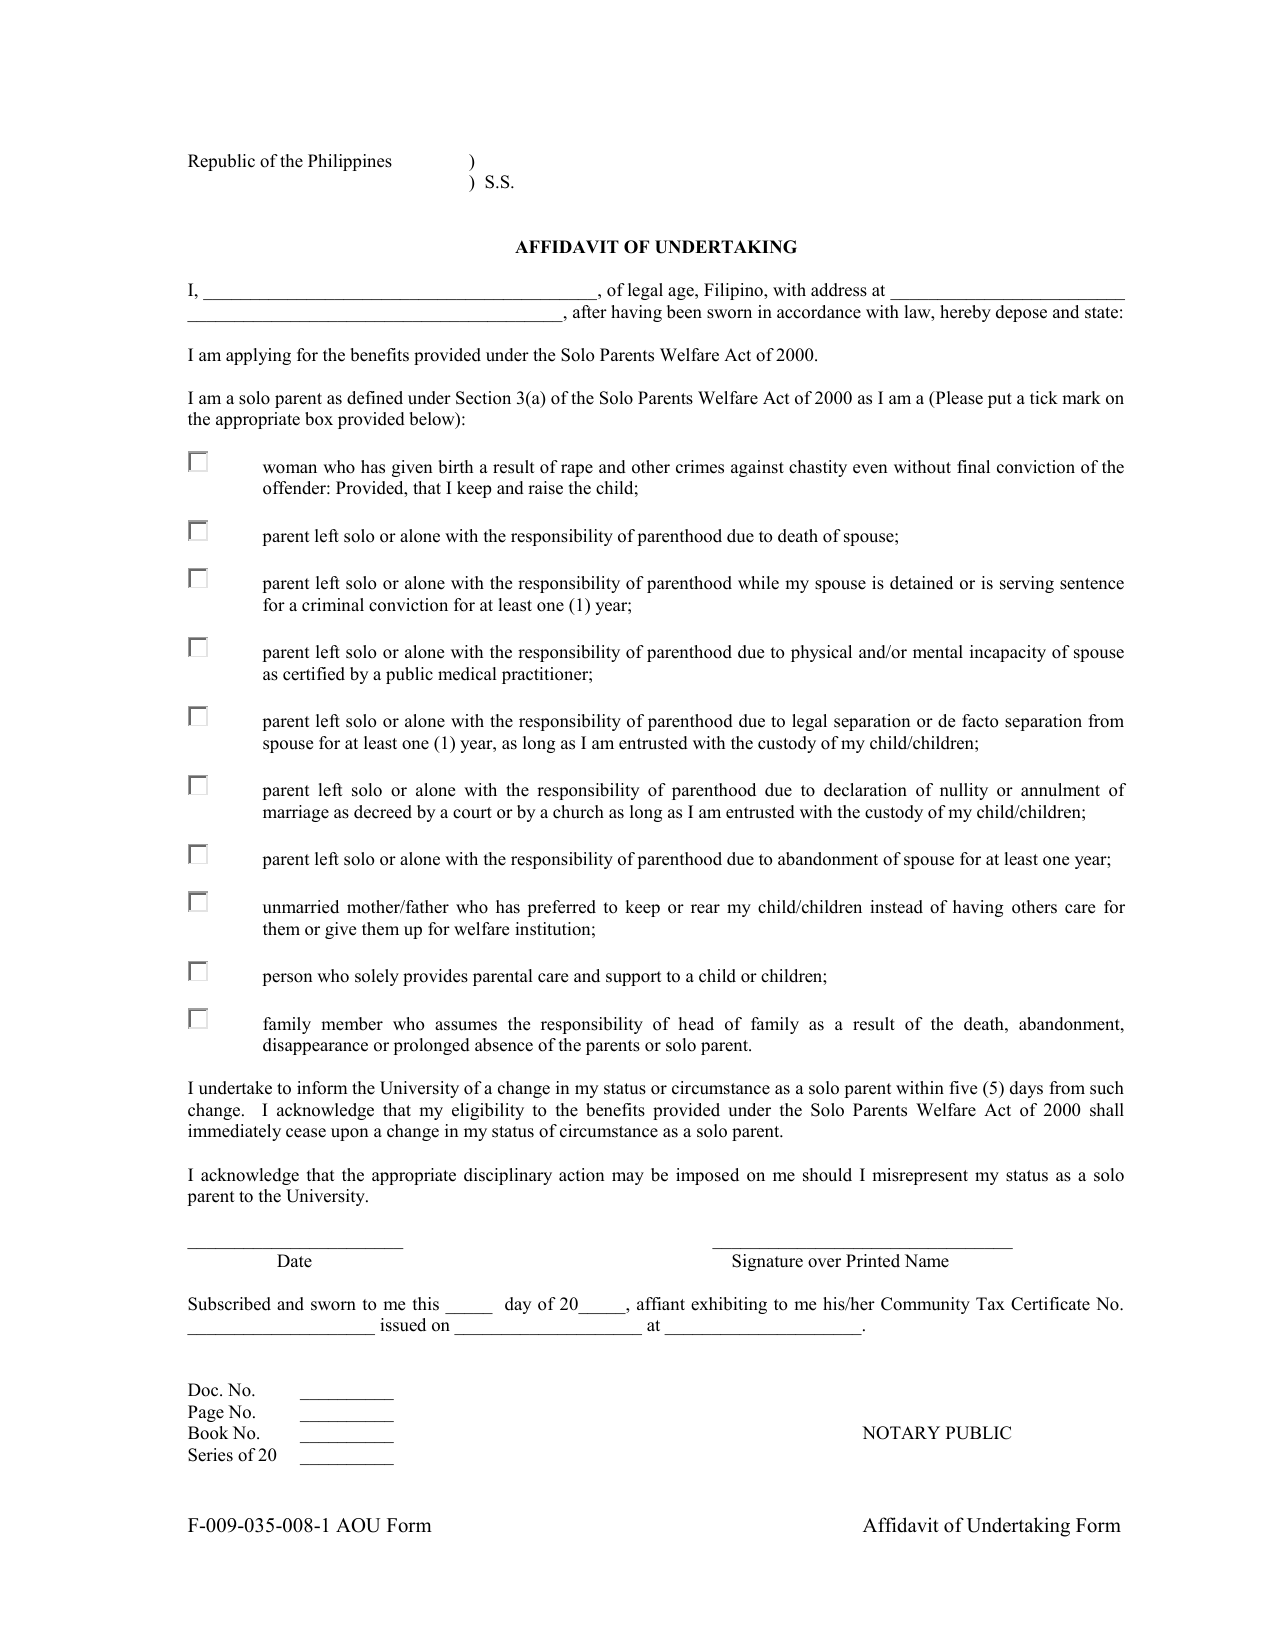 Affidavit of Undertaking Form - SOLO PARENT (22) For legal undertaking template